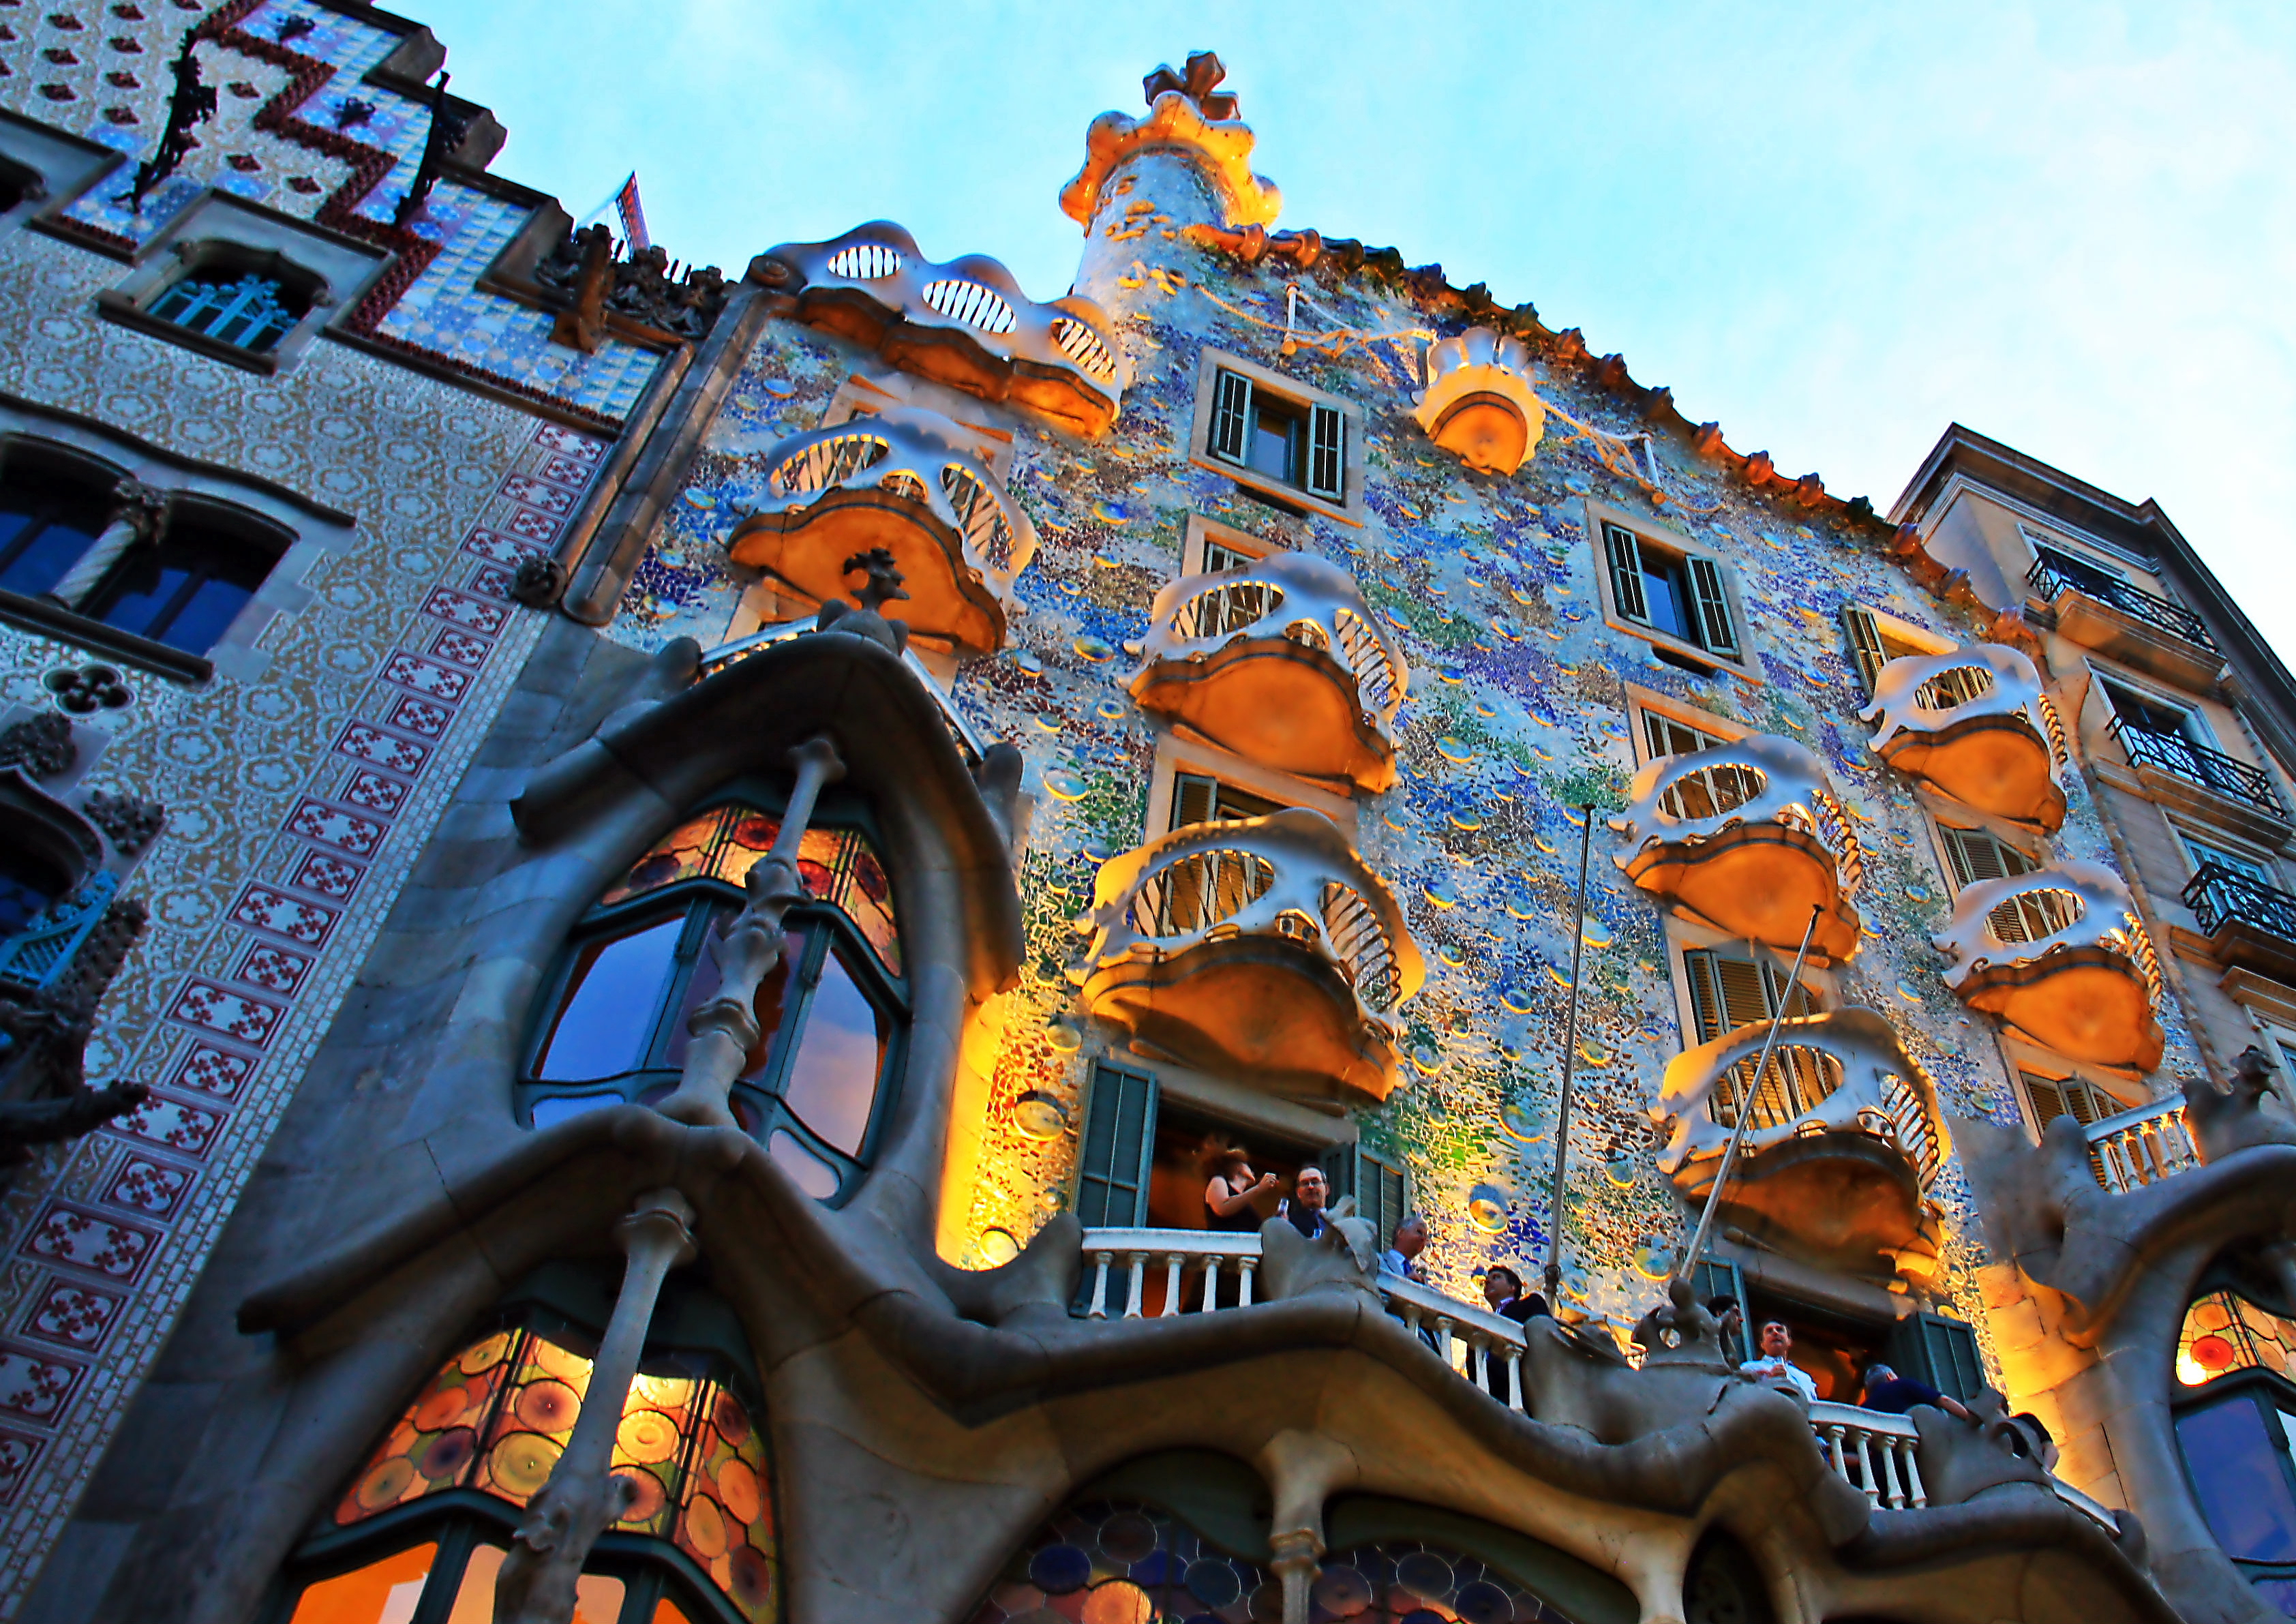 Творения гауди. Антонио Гауди. Барселона.. Испания архитектура Антонио Гауди. Дом Бальо Гауди - Барселона, Испания. Архитектор Испании Антонио Гауди.